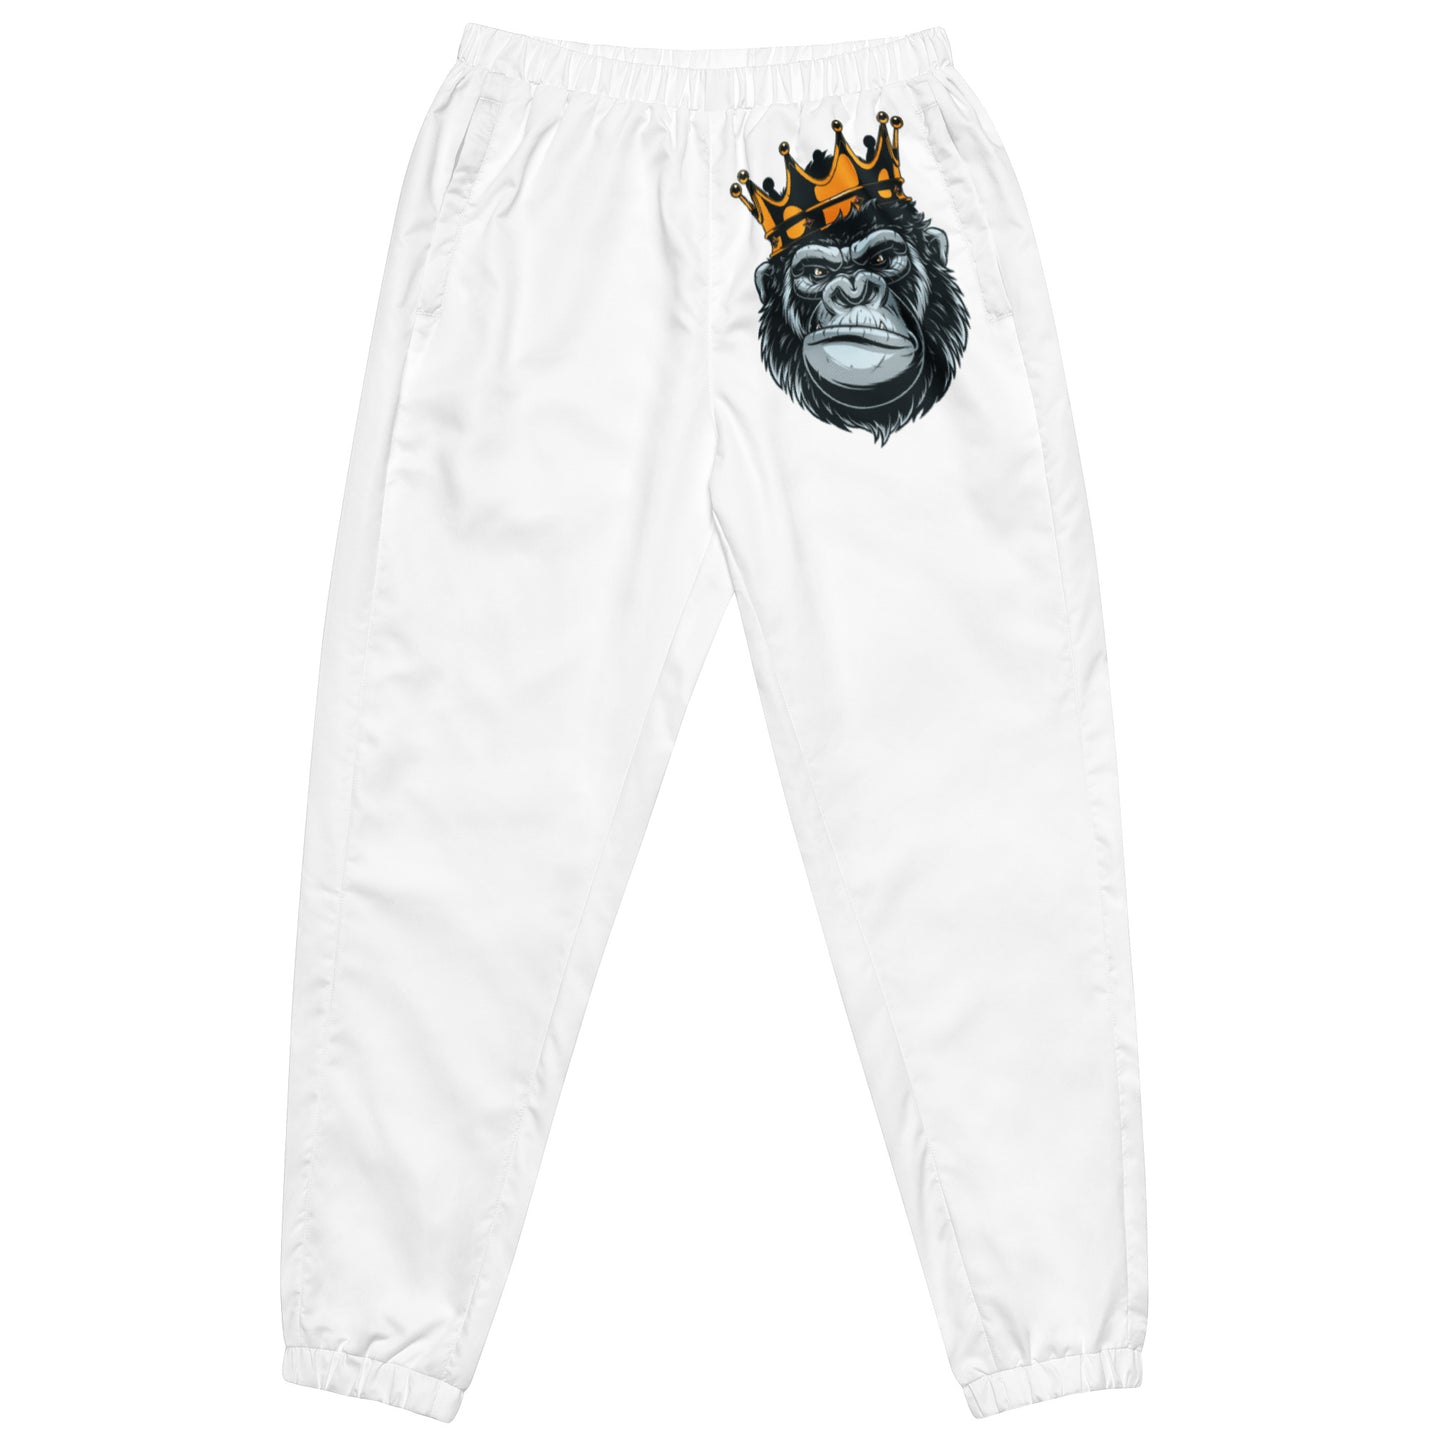 Ape pants